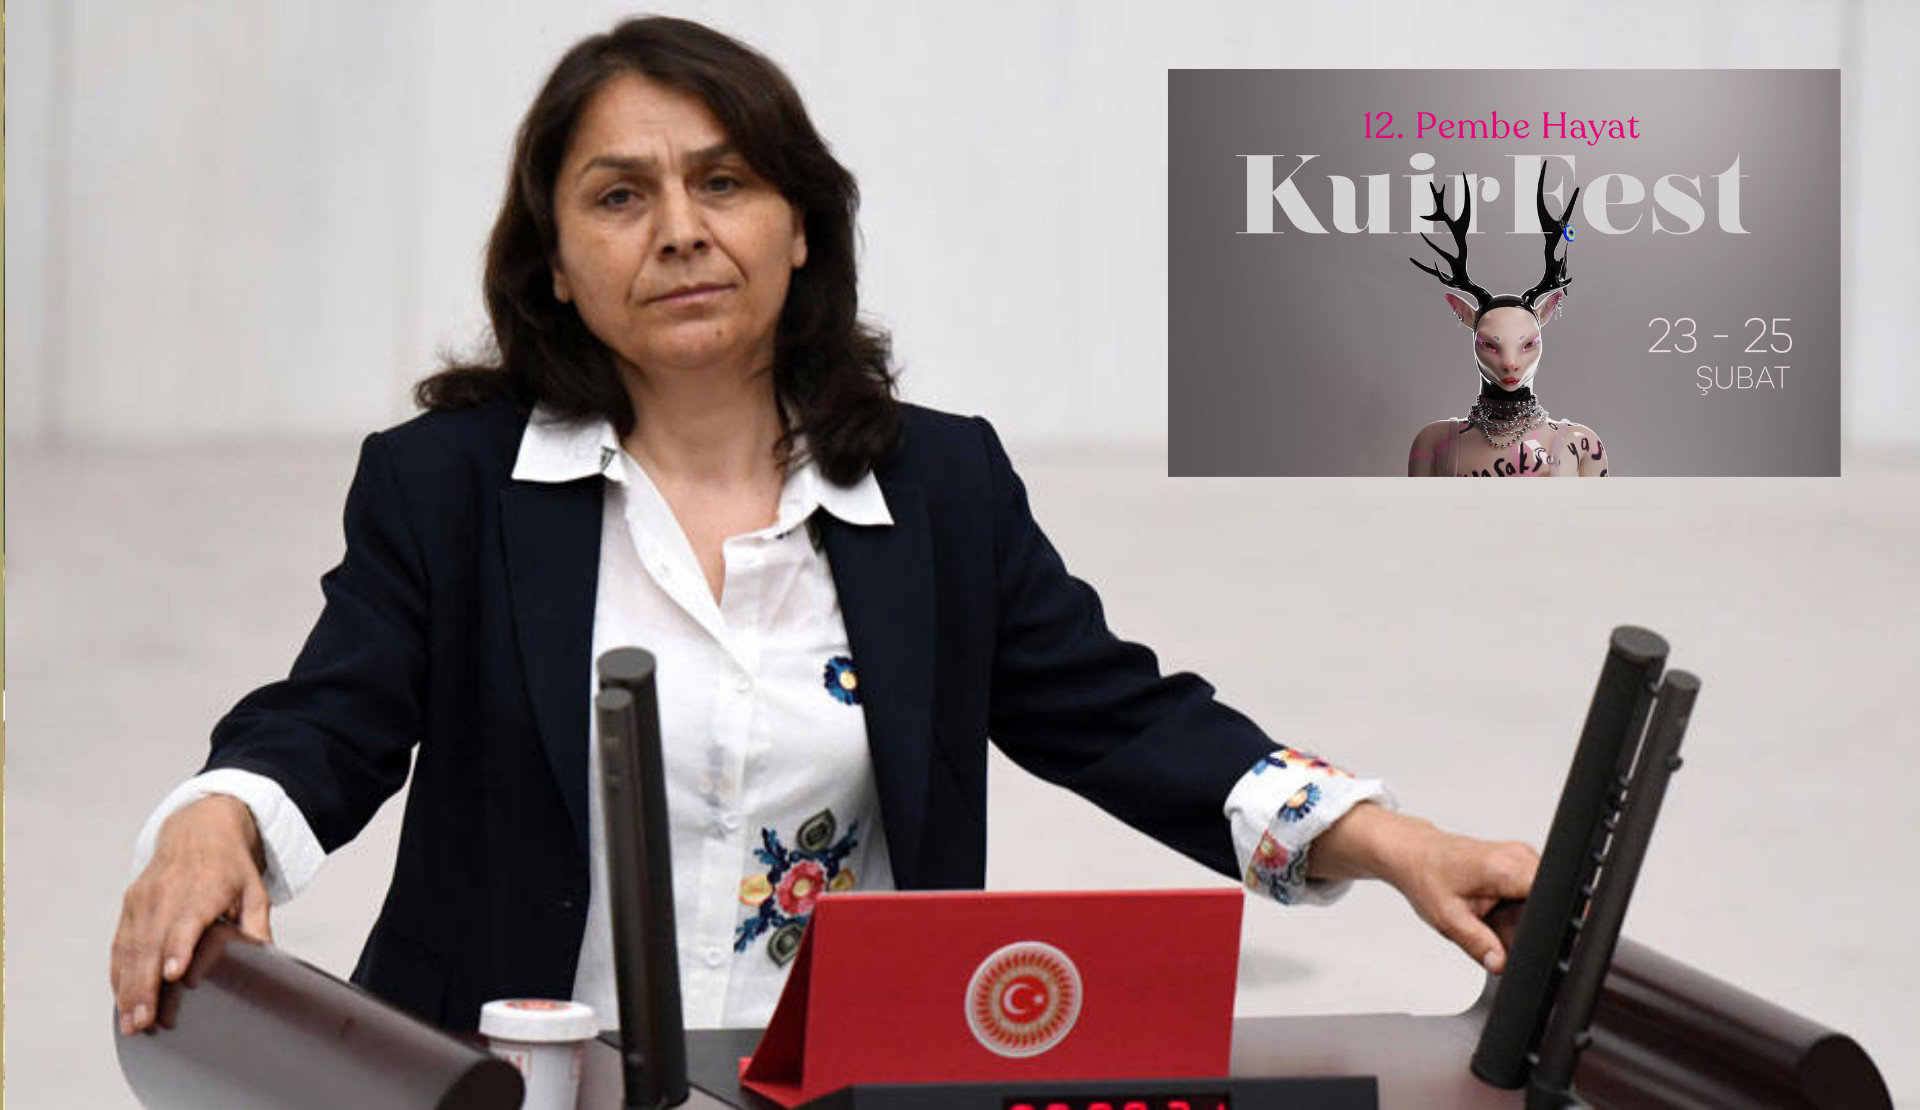 Özgül Saki: “What is the threat to public order associated with the Pink Life KuirFest?” | Kaos GL - News Portal for LGBTI+ News